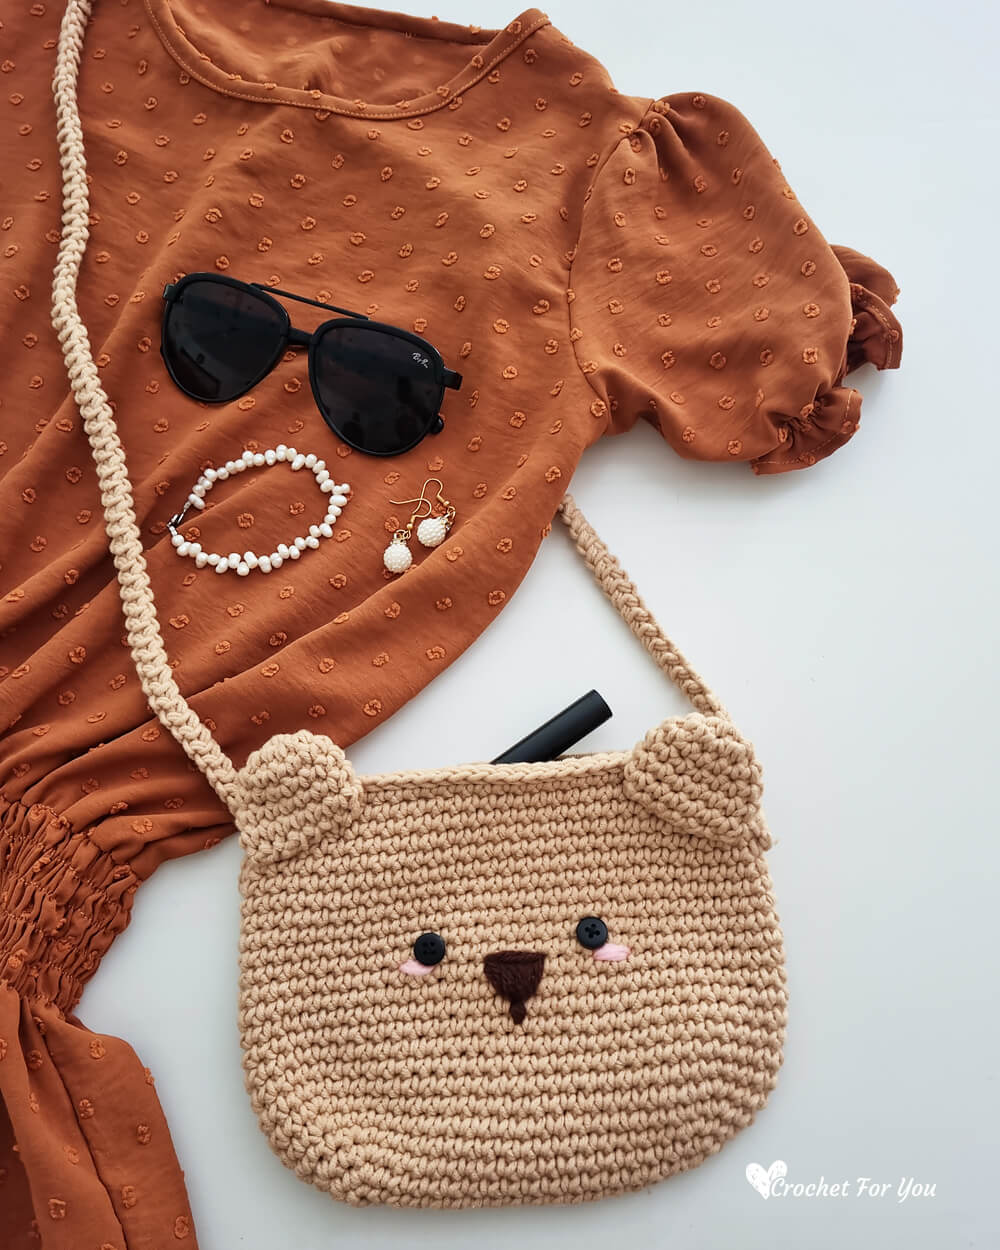 Crochet Handbag Patterns - Pinterest Best | The WHOot | Handbag patterns, Crochet  handbags patterns, Crochet handbag patterns